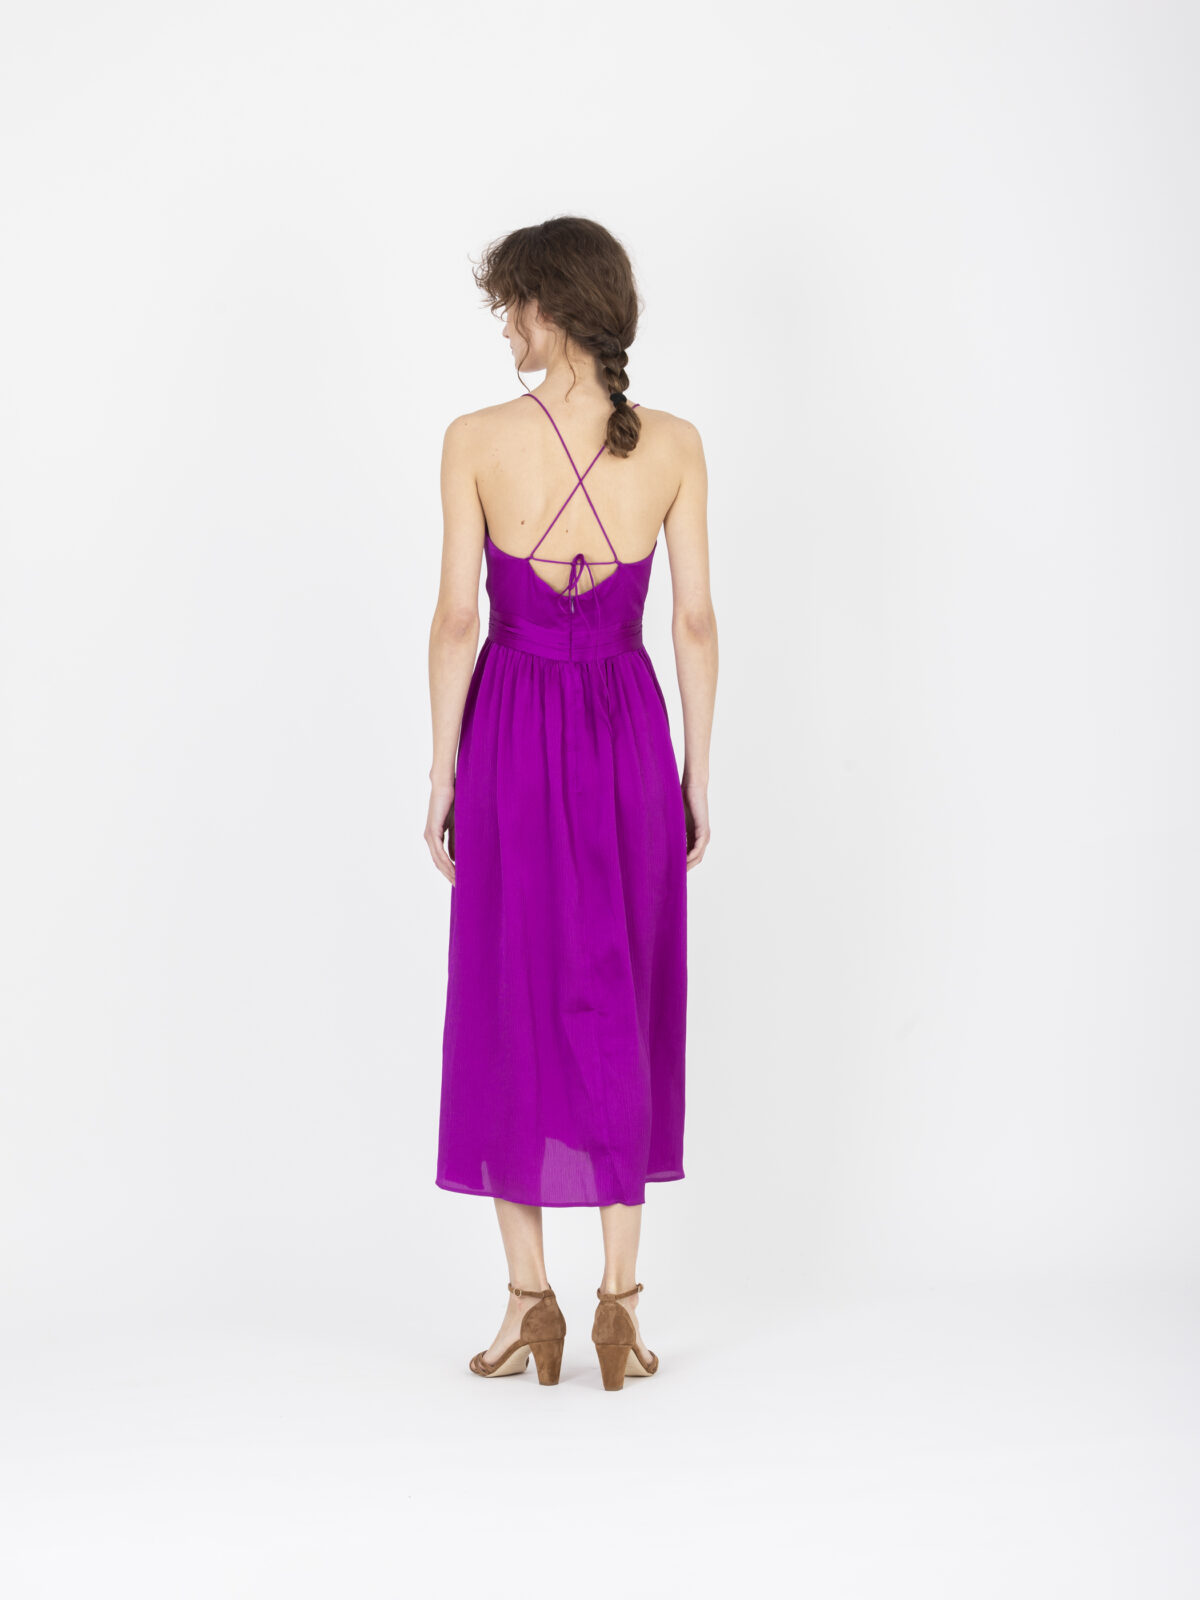 crest-violet-dress-strappy-open-back-gathered-waist-suncoo-matchboxathens